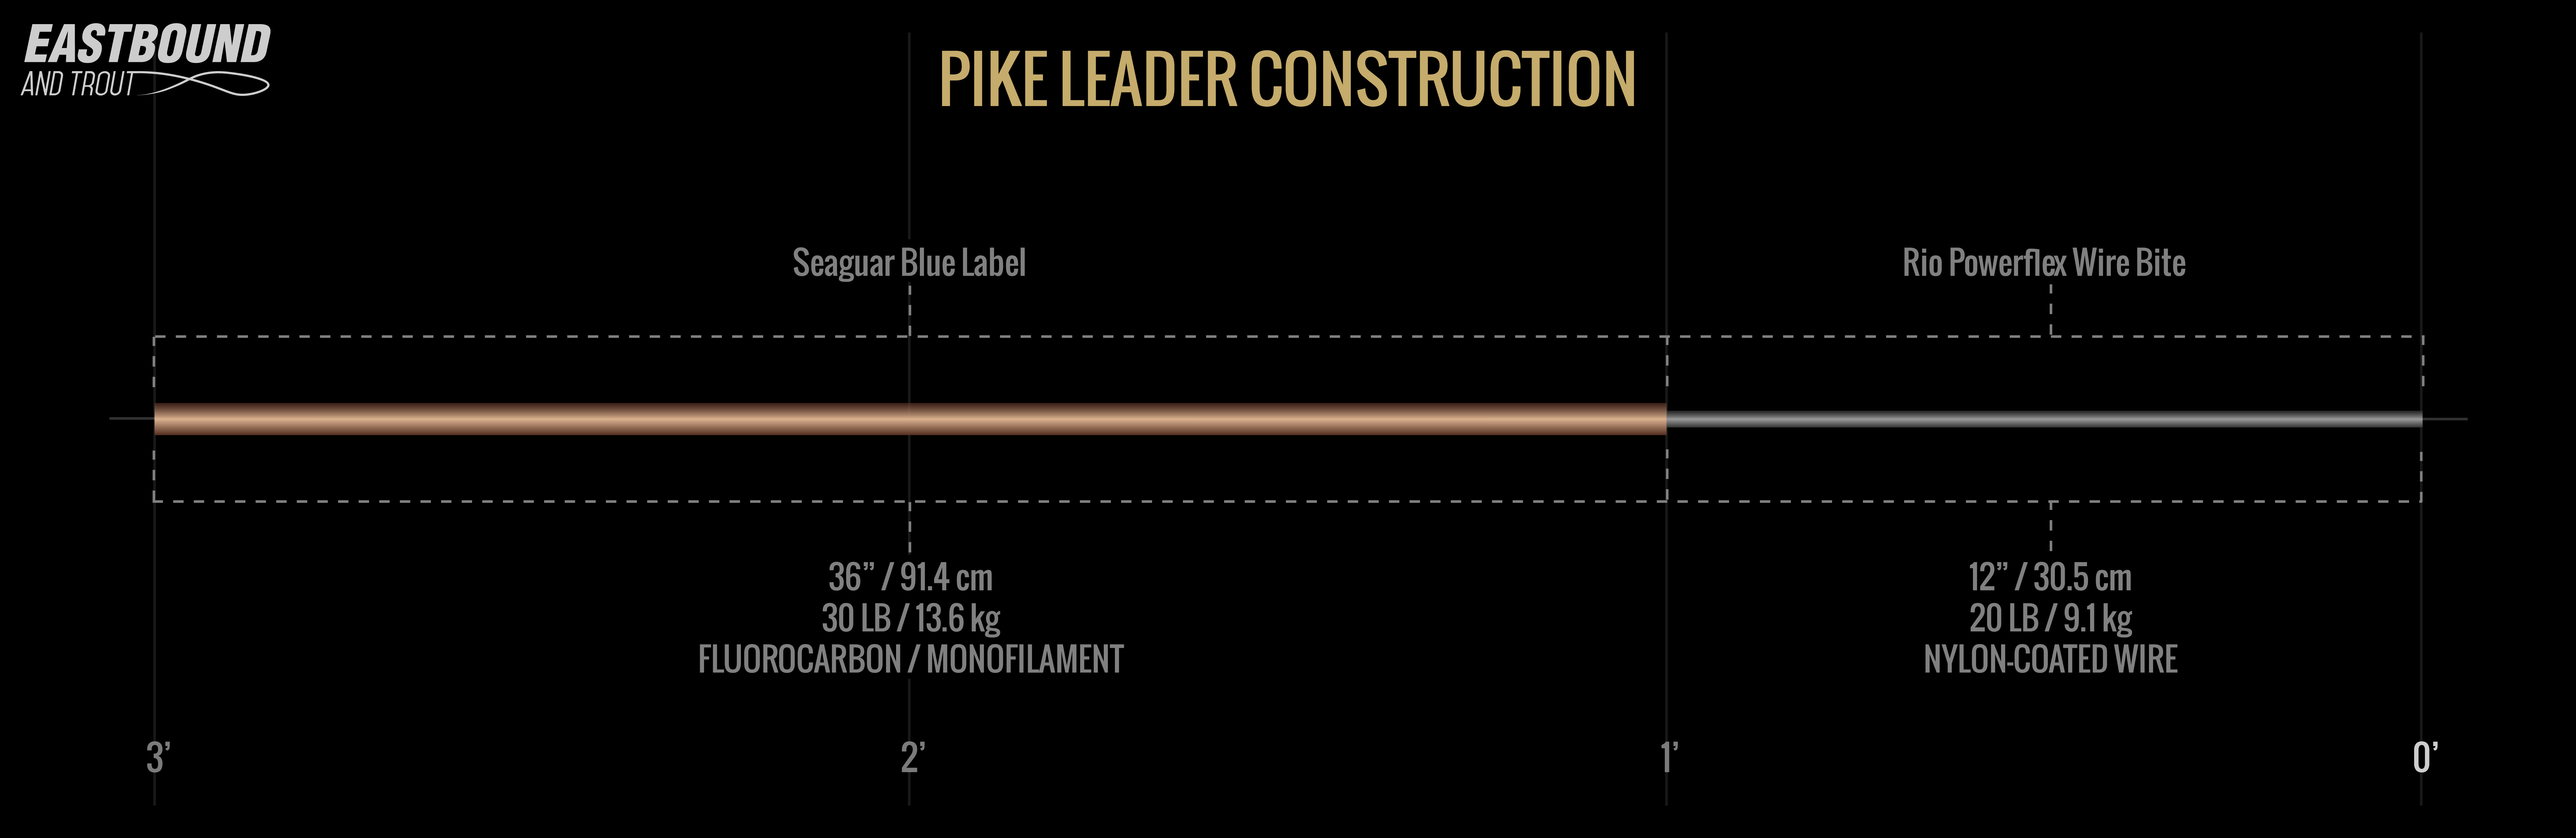 Rio Powerflex Draht Biss Pike Fly Leader Vorfachmaterial aus Flurocarbon Material 